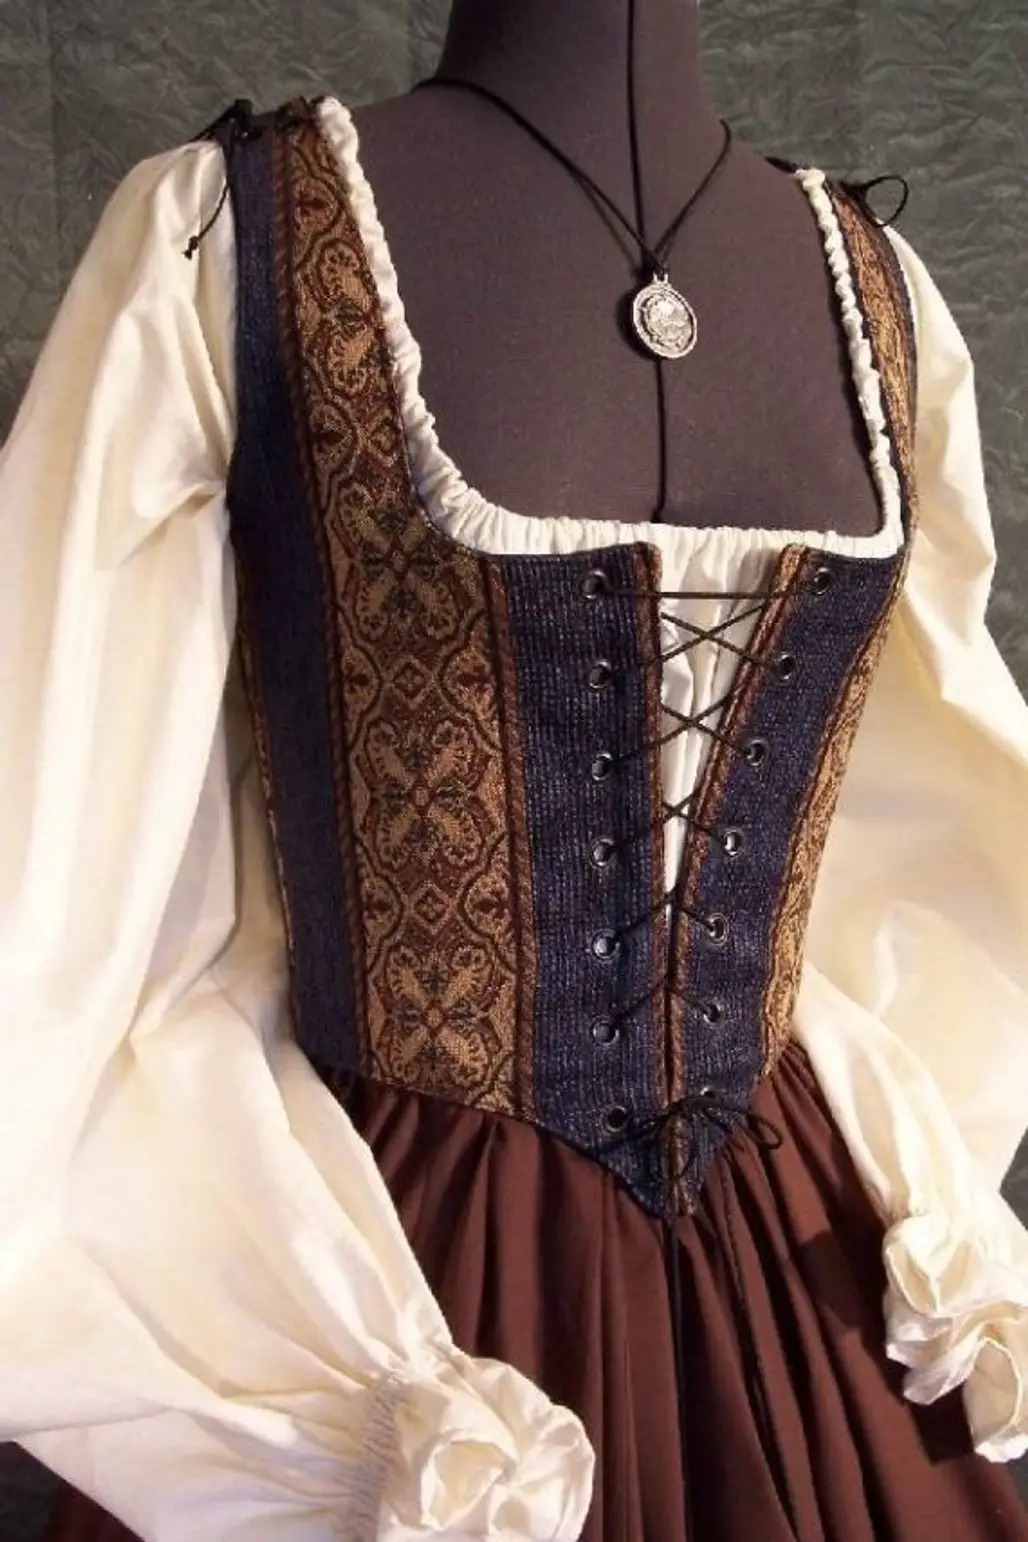 Renaissance Wench Corset Dress